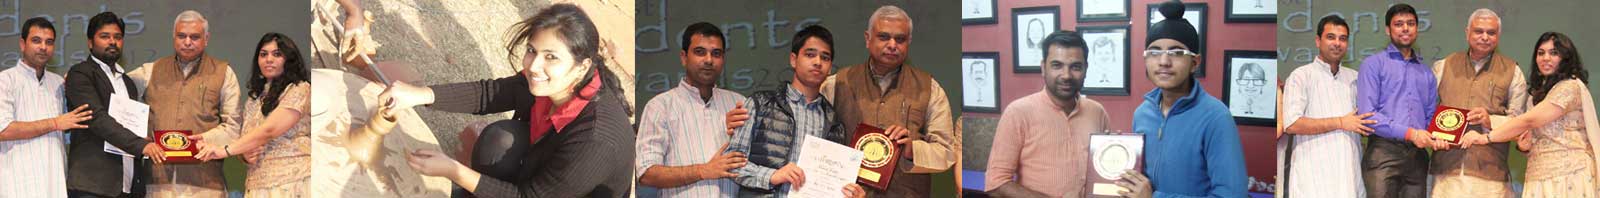 Rajesh Kumar Awarded Student of the Year 2011